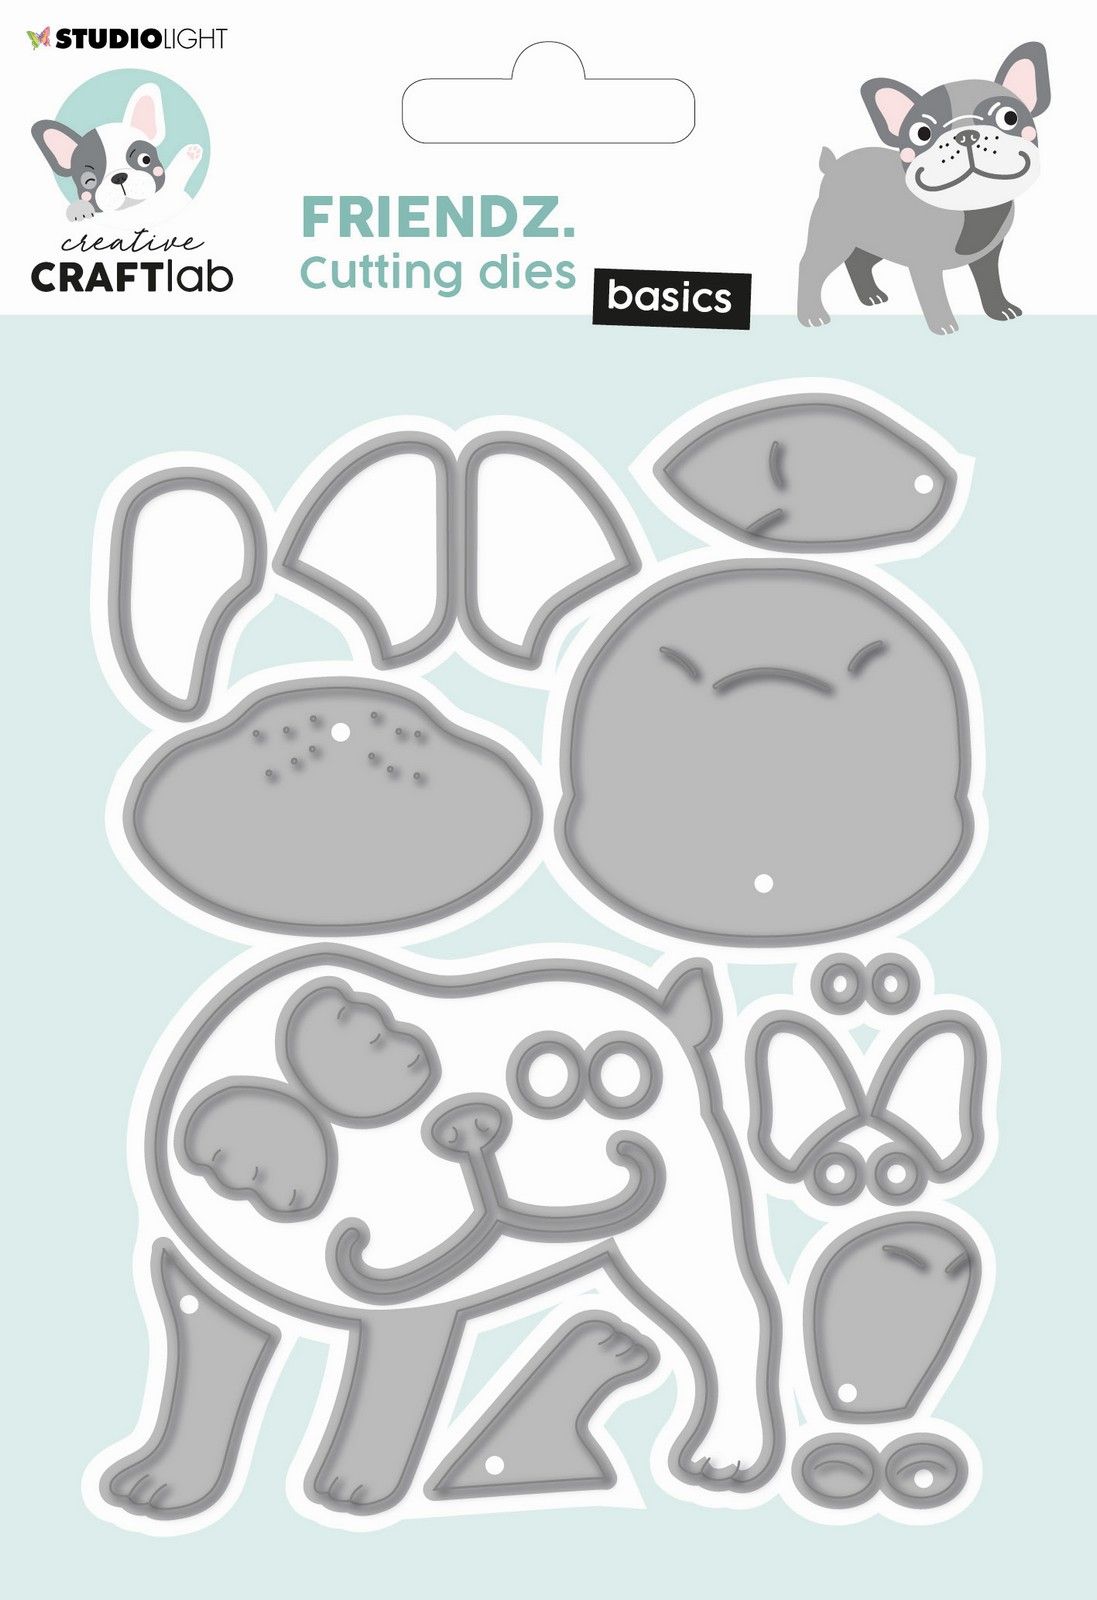 Creative Craftlab • Friendz plantilla de corte Buddy